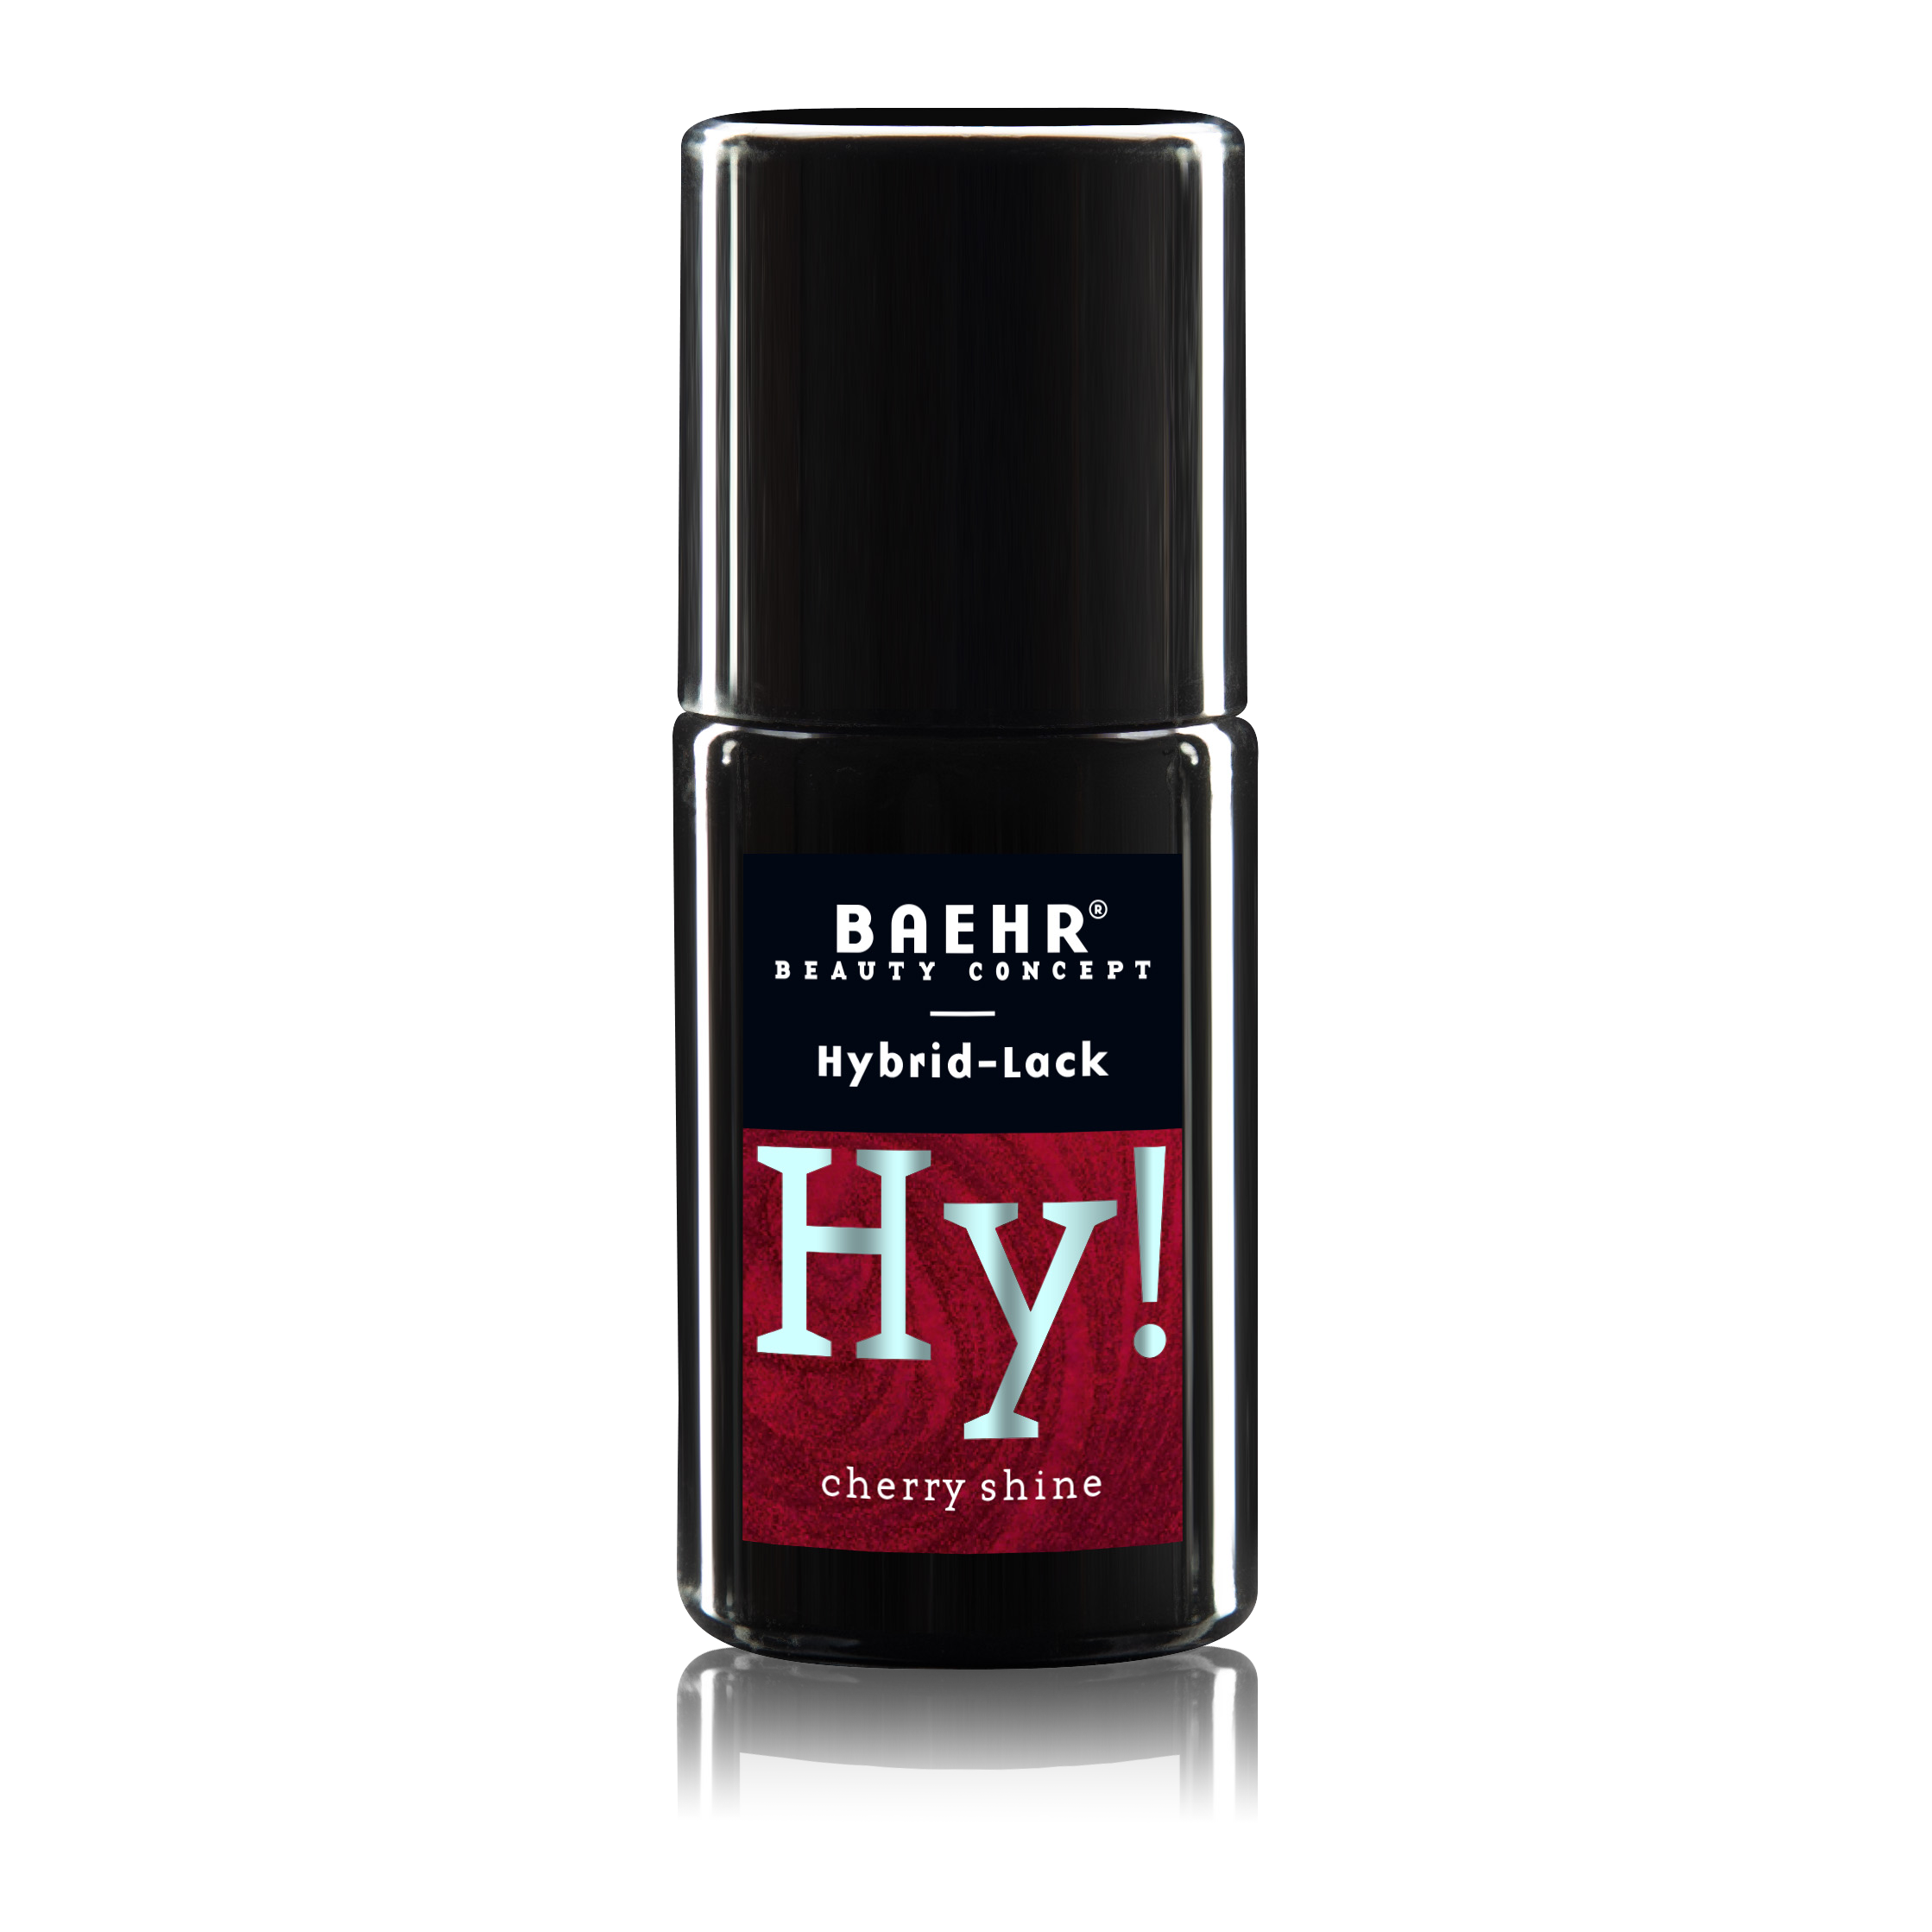 hy-hybrid-lack--cherry-shine_27303